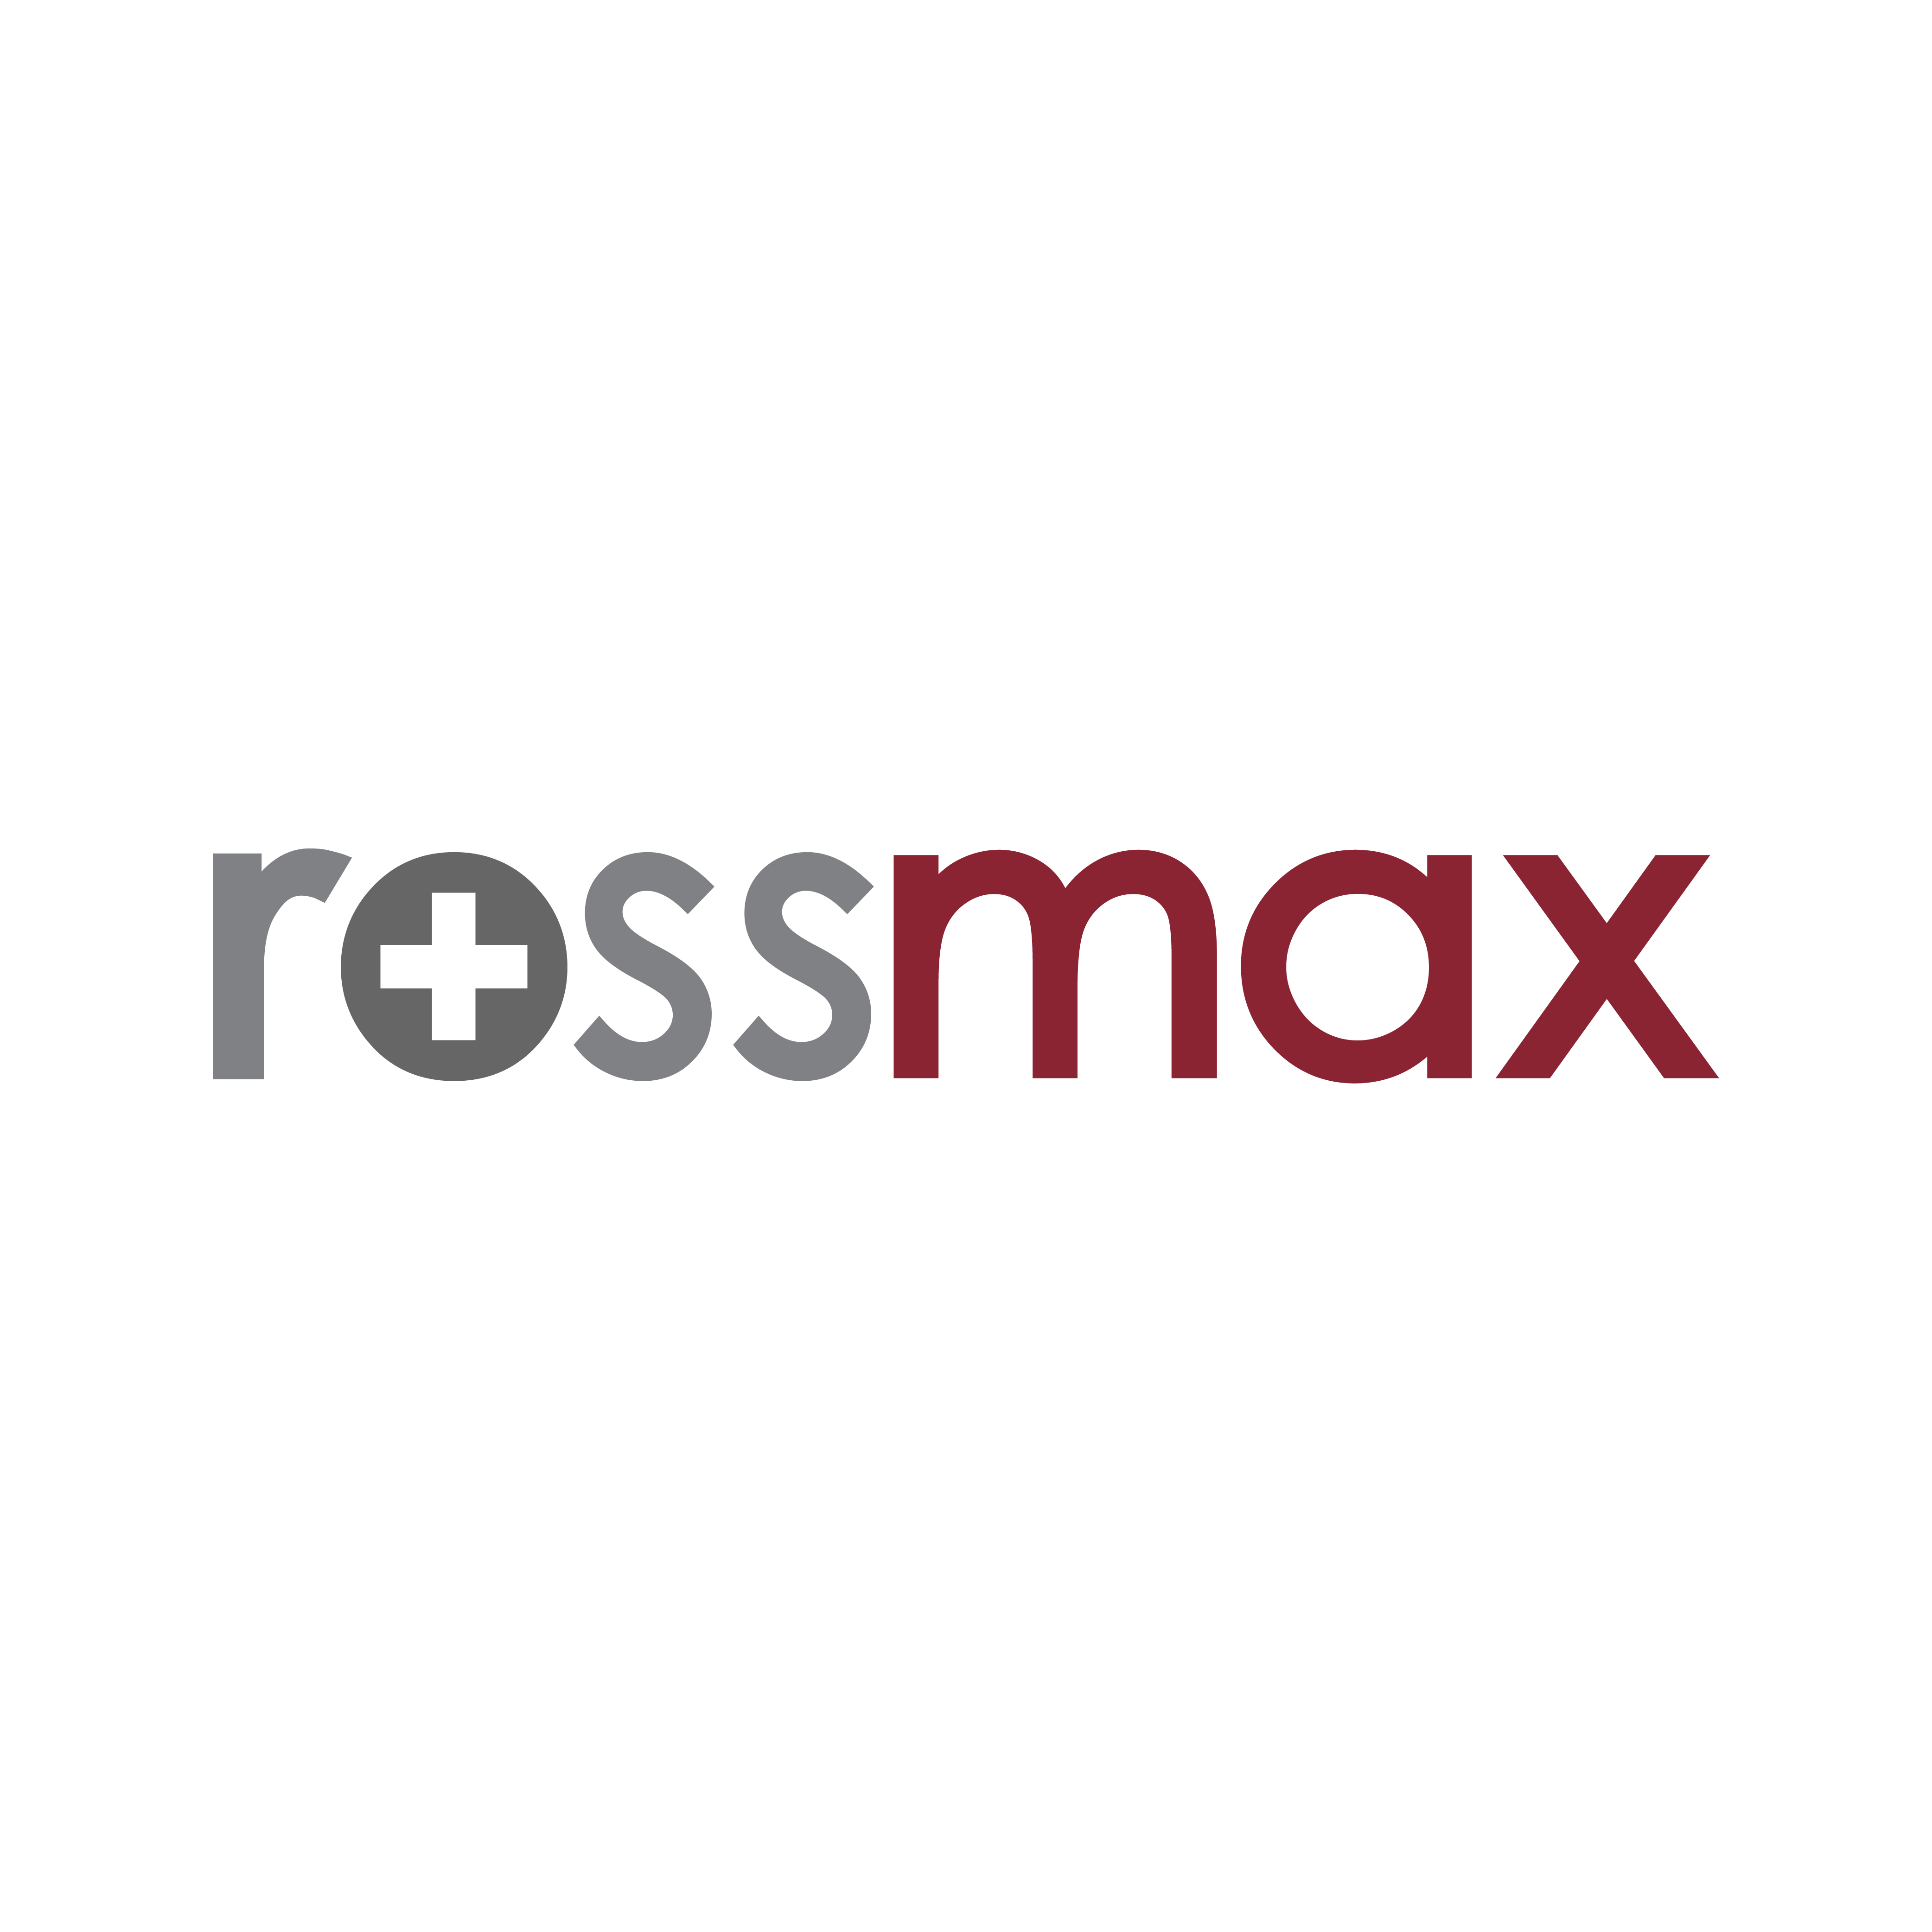 rossmax logo